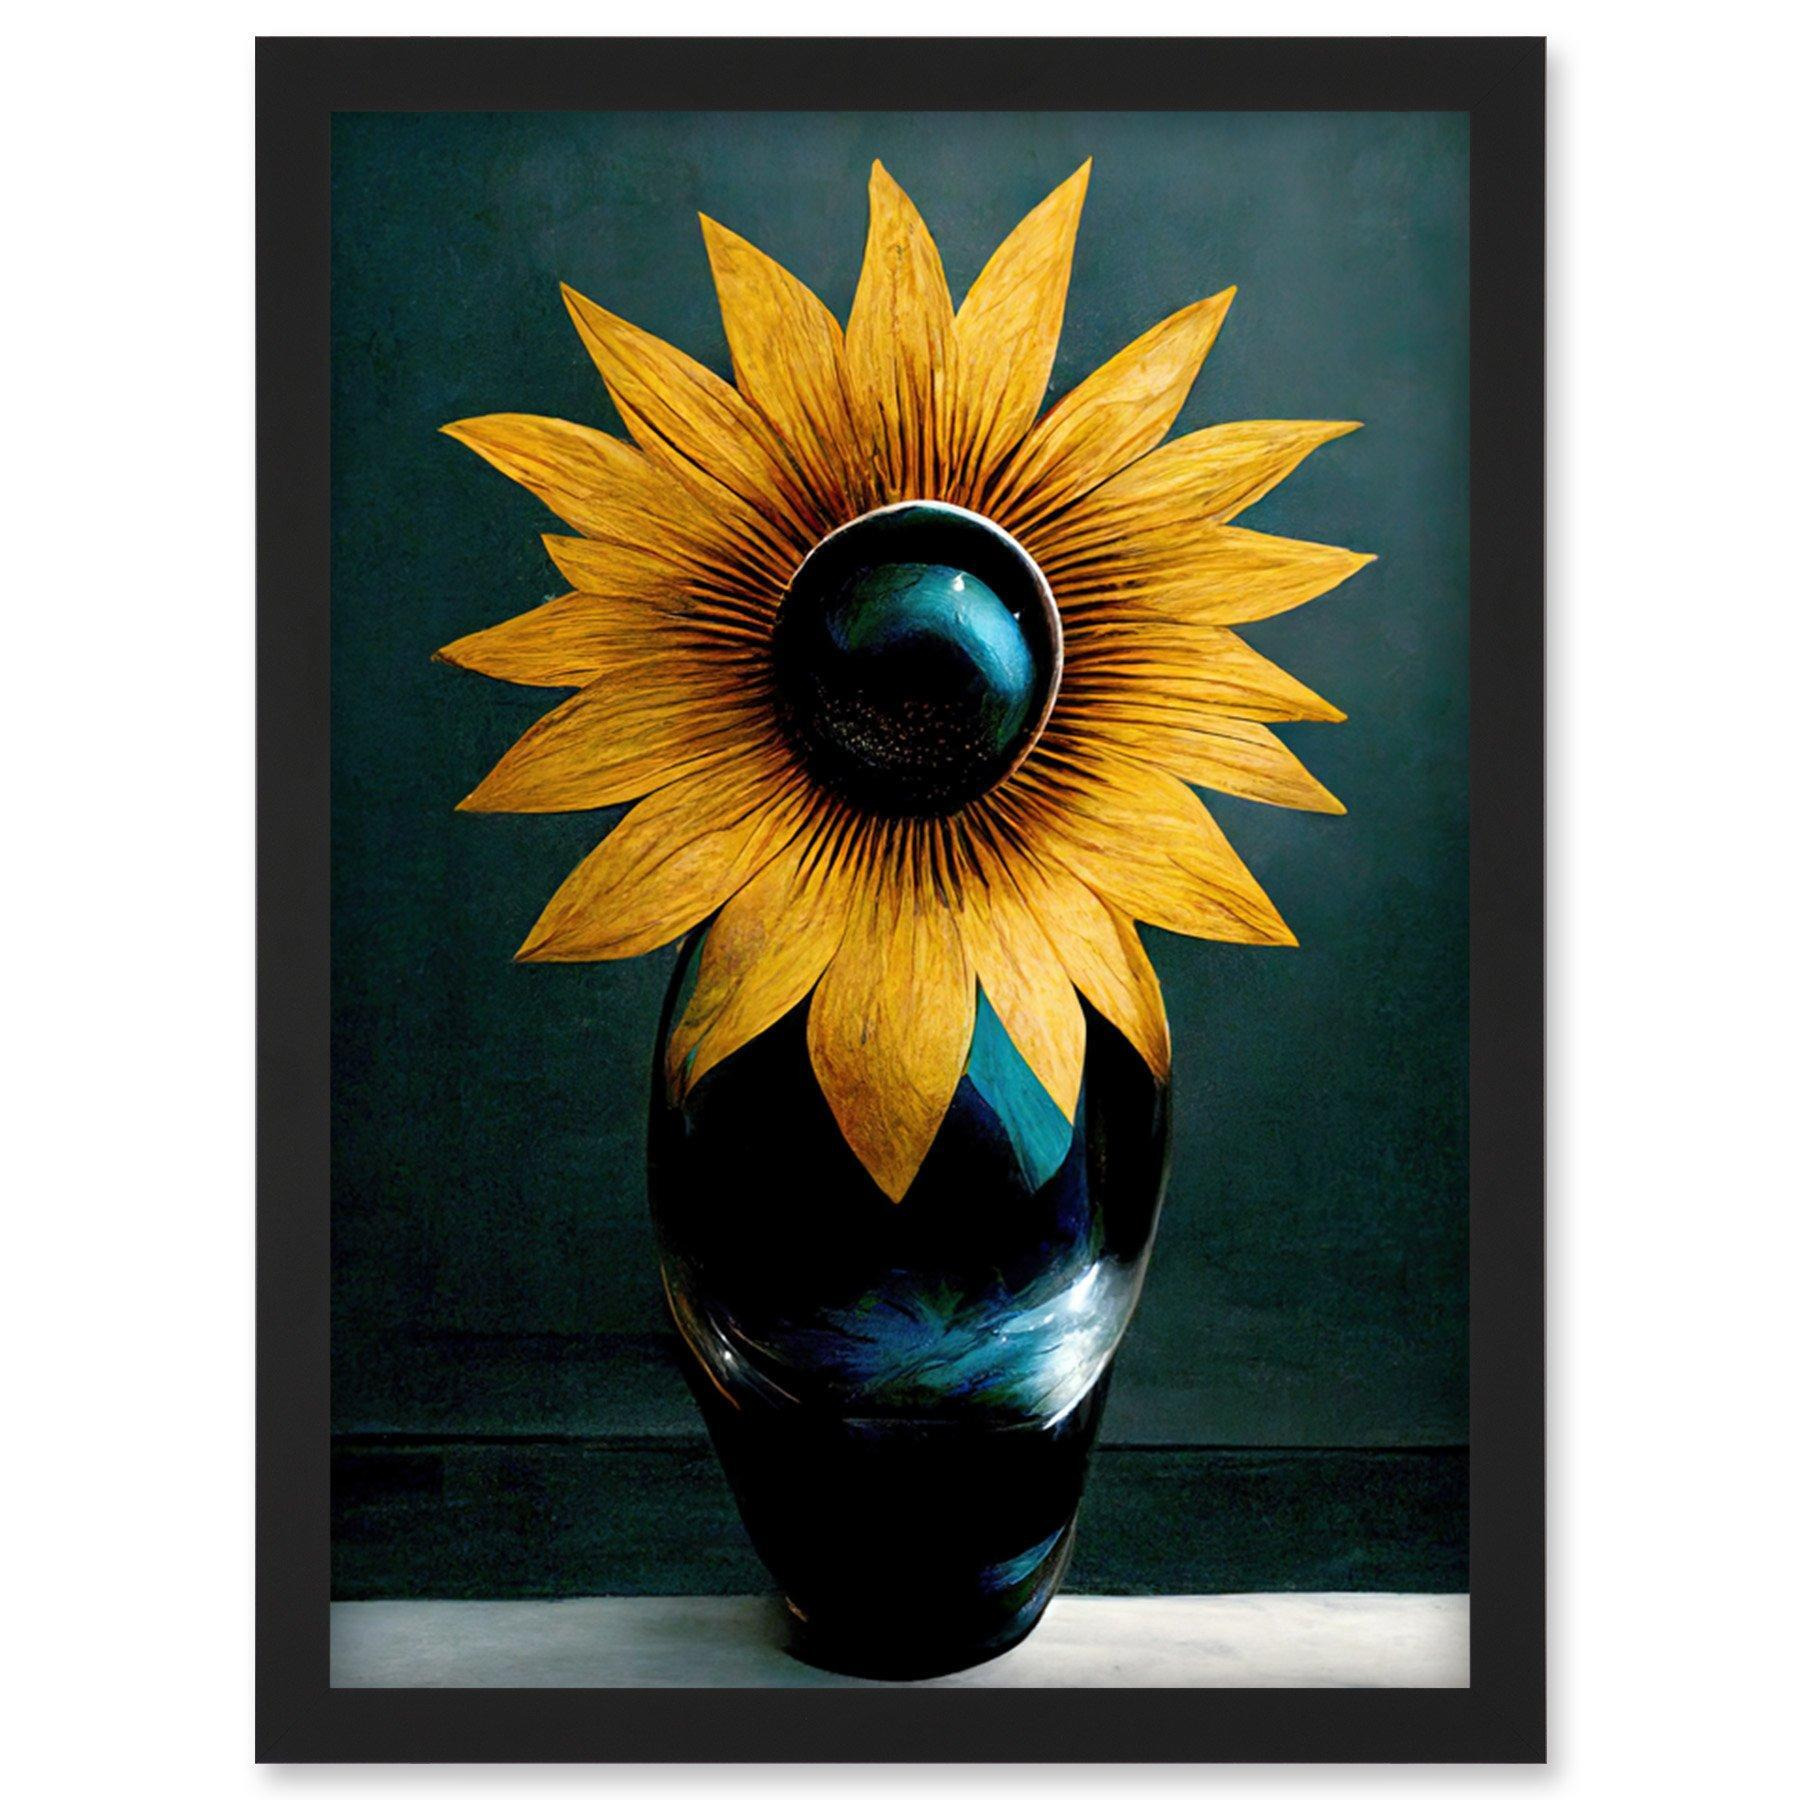 Modern Bright Single Yellow Black Sunflower In Vase Artwork Framed Wall Art Print A4 - image 1